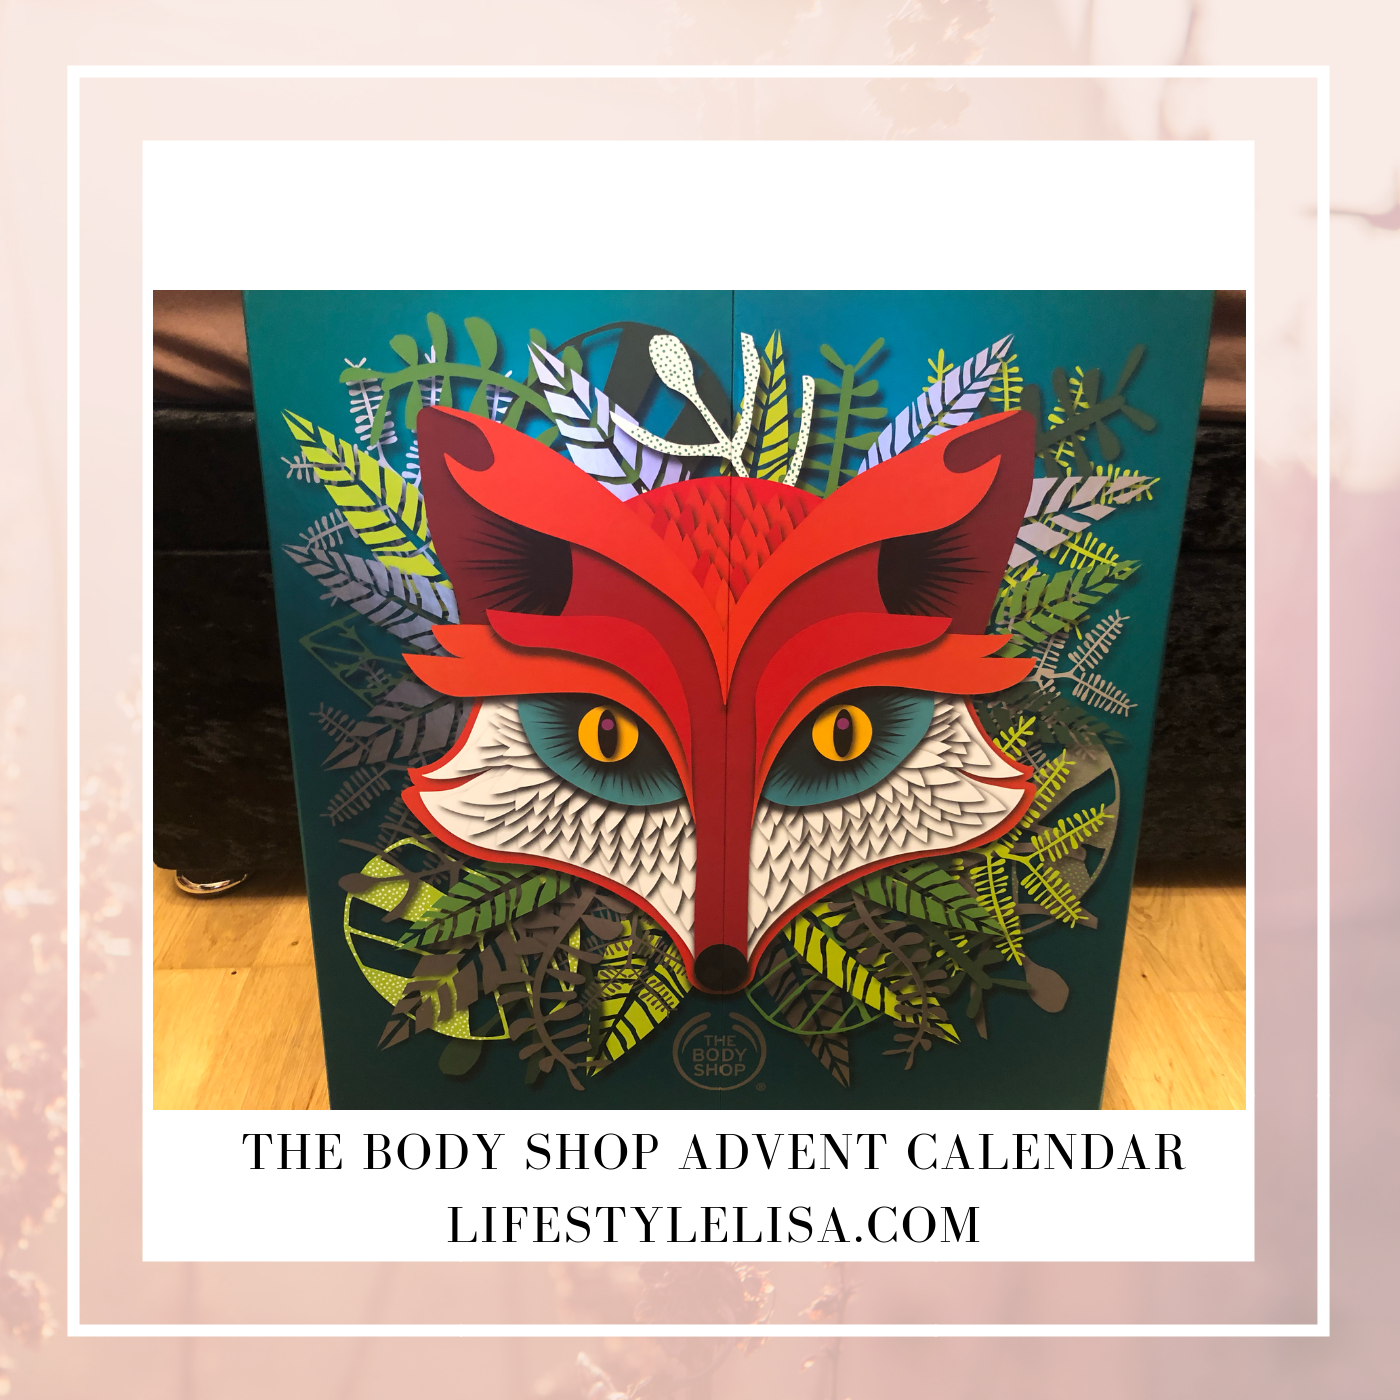 The Body Shop advent calendar